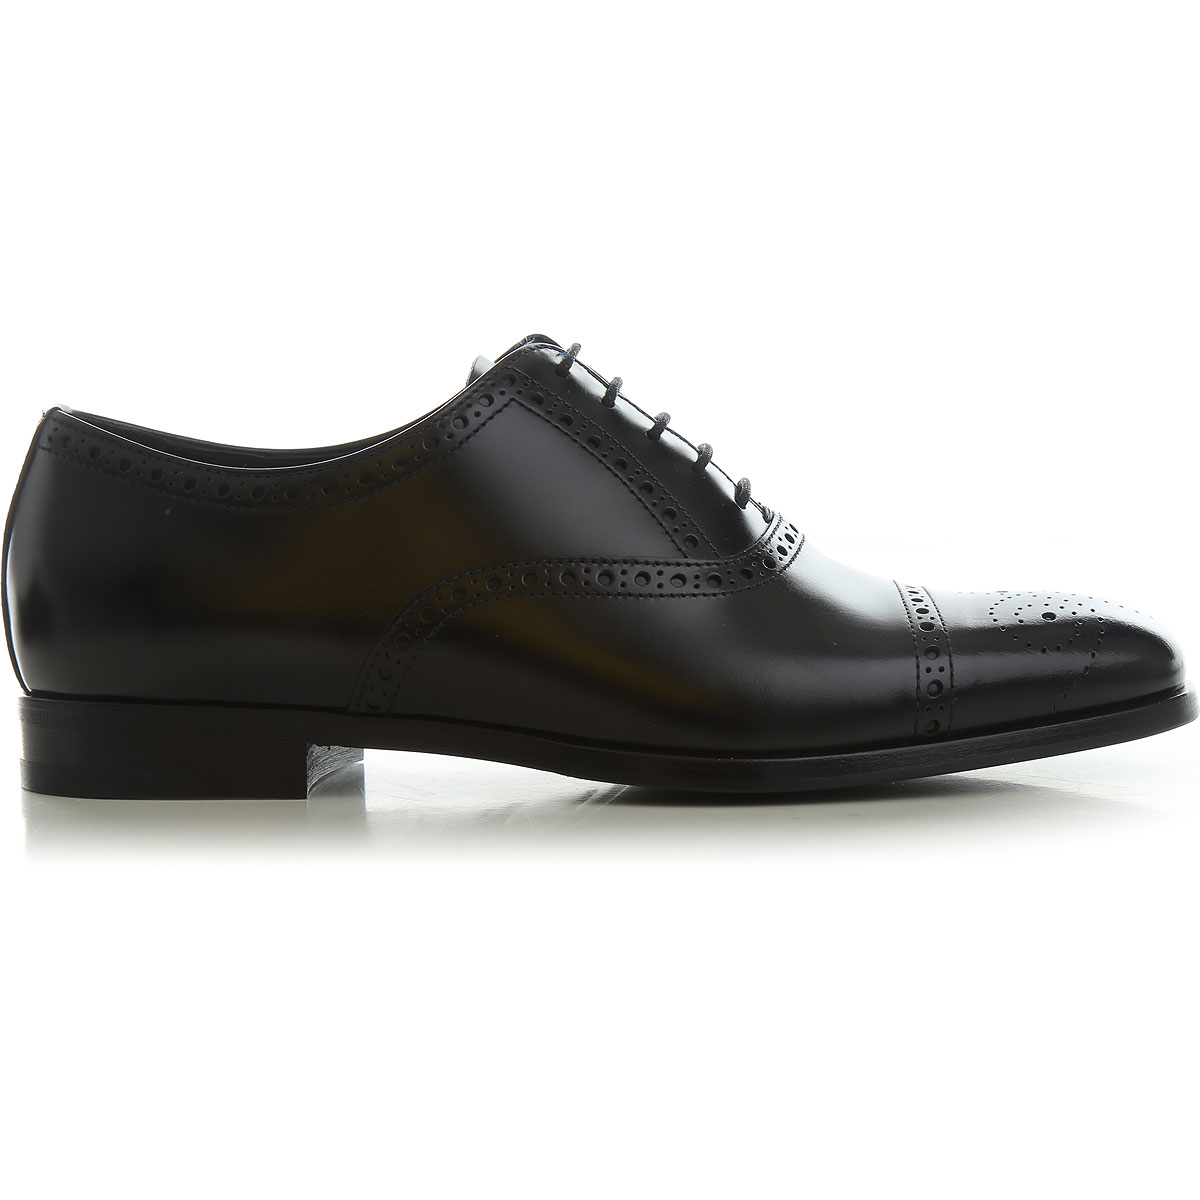 Mens Shoes Prada, Style code: 2eb187-p39-f0002